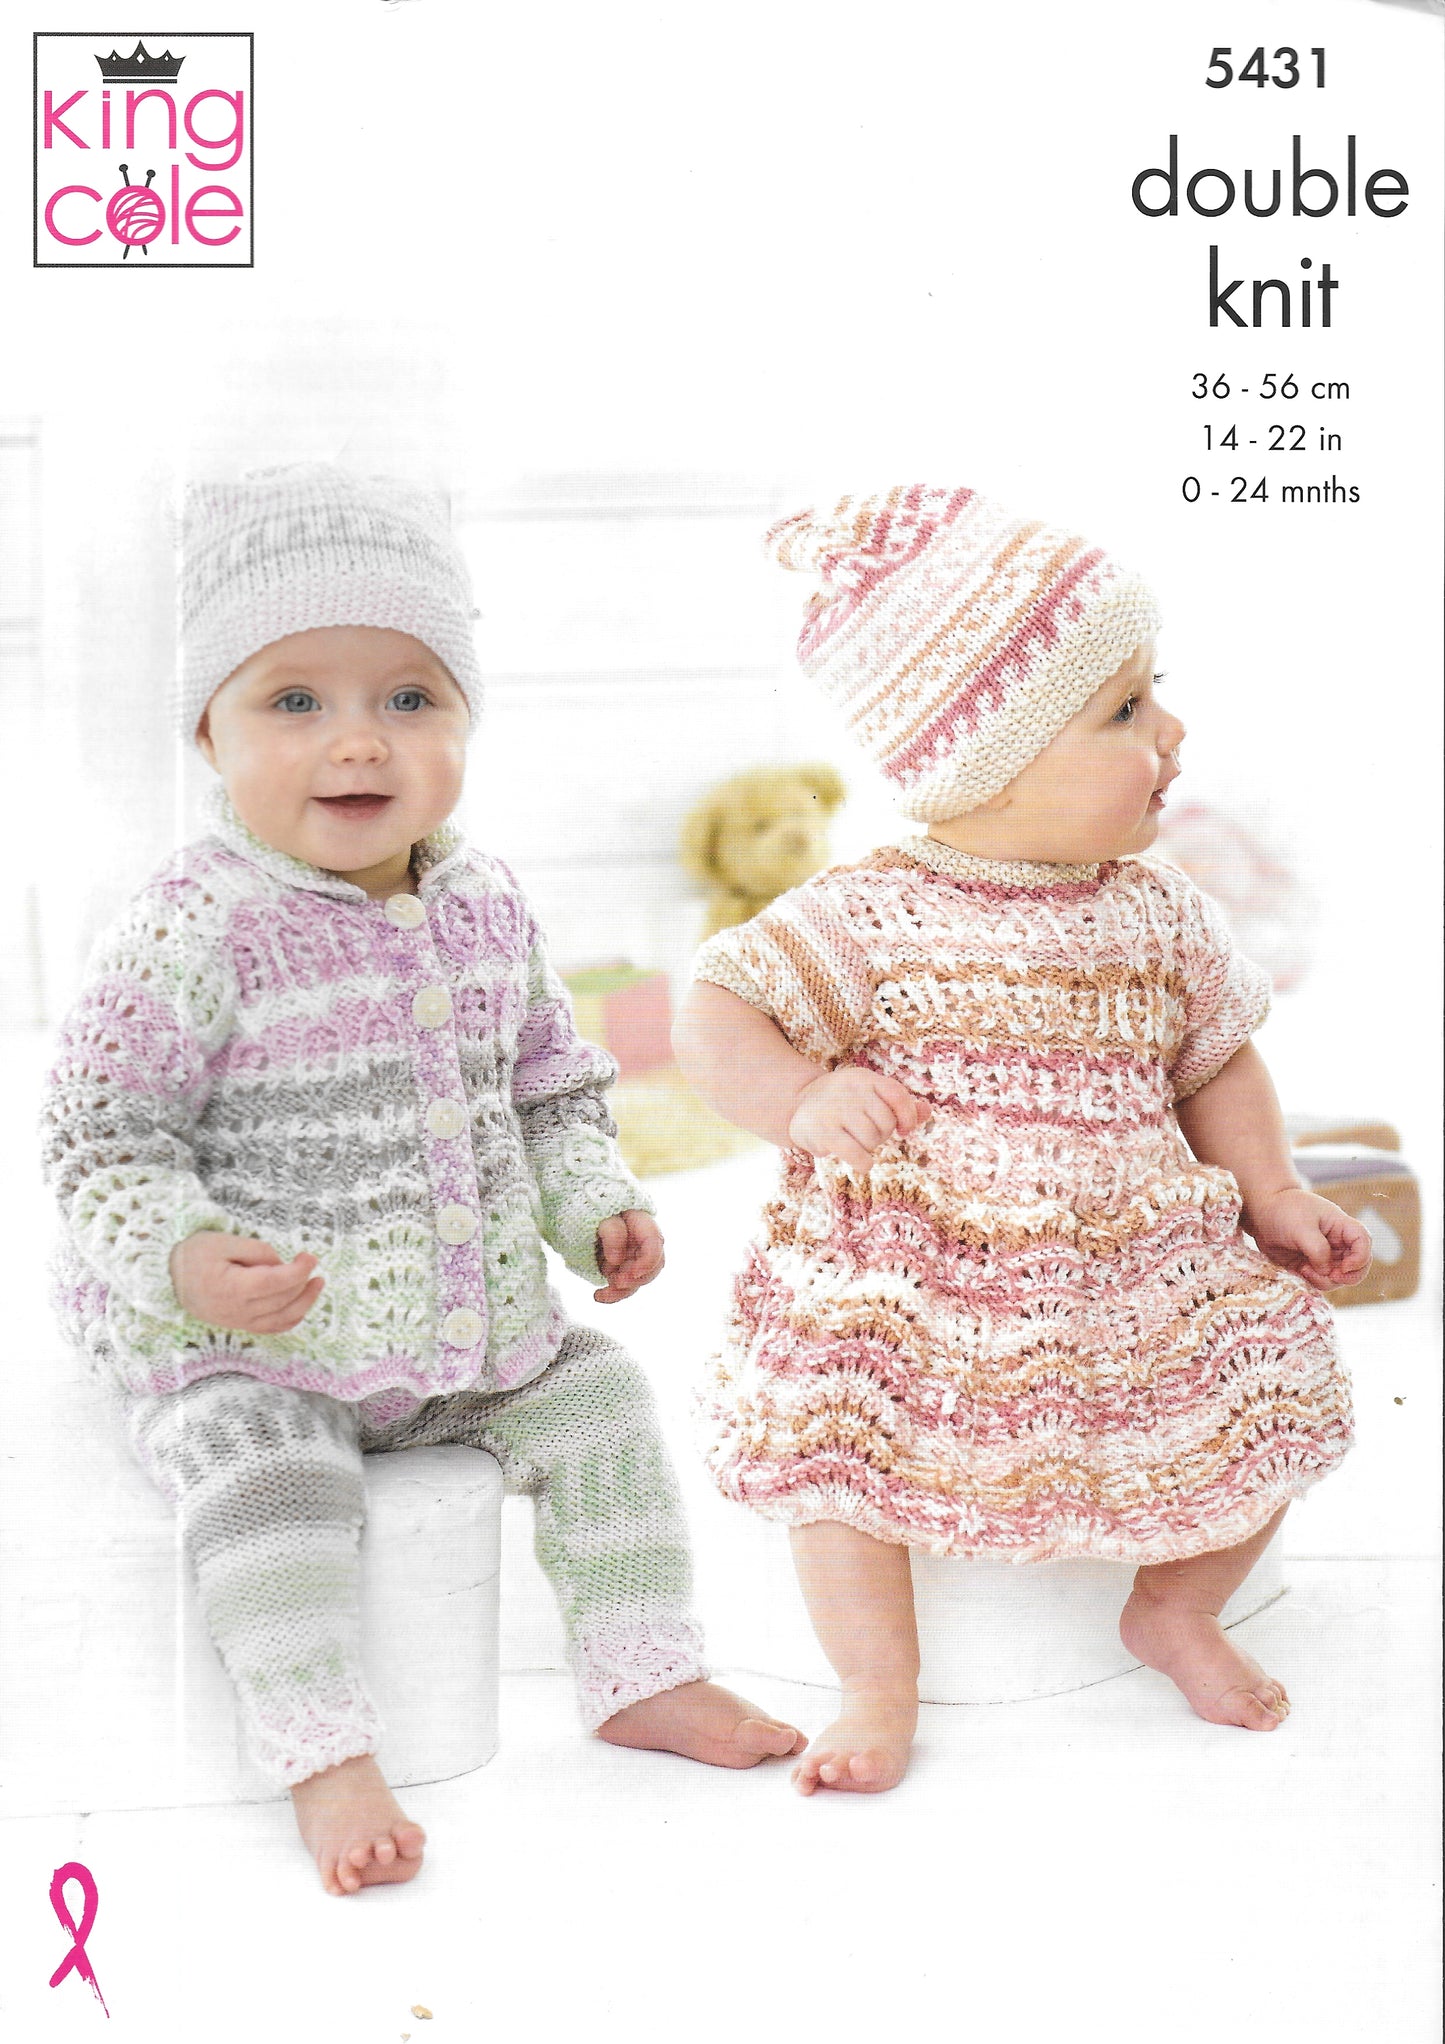 5431 King Cole Double Knit Baby Set Knitting Pattern